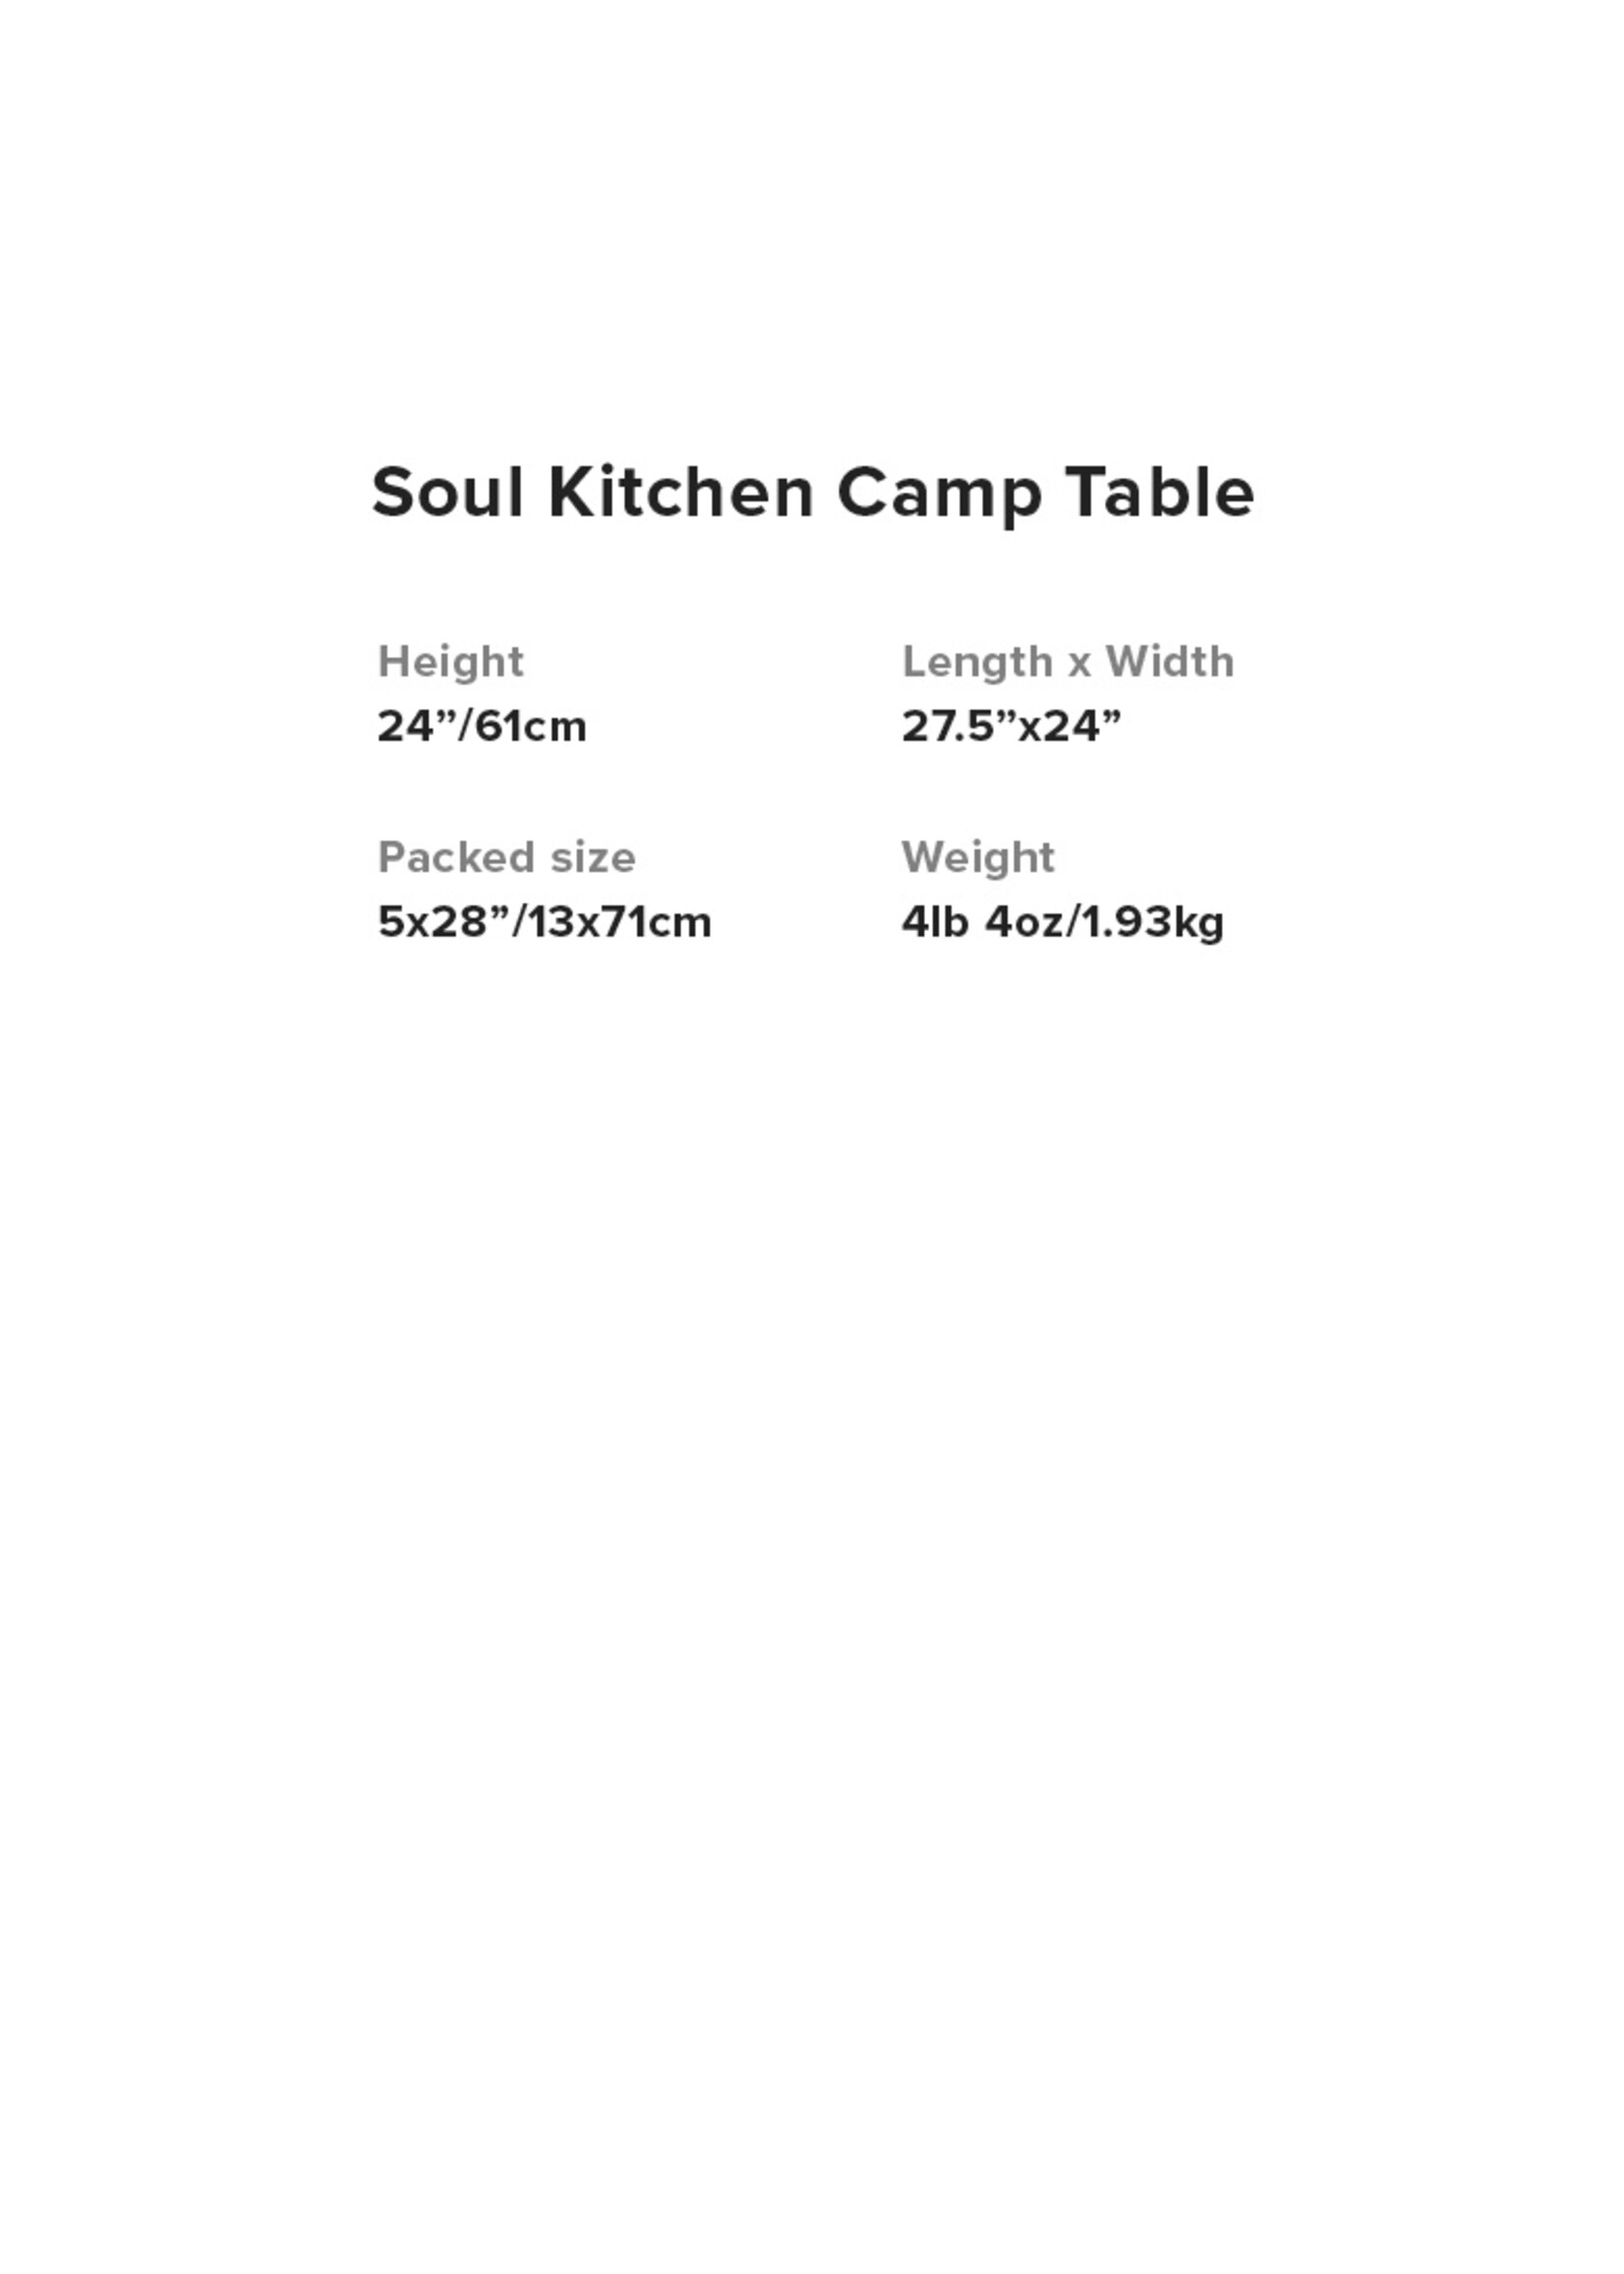 Big Agnes Soul Kitchen Camp Table